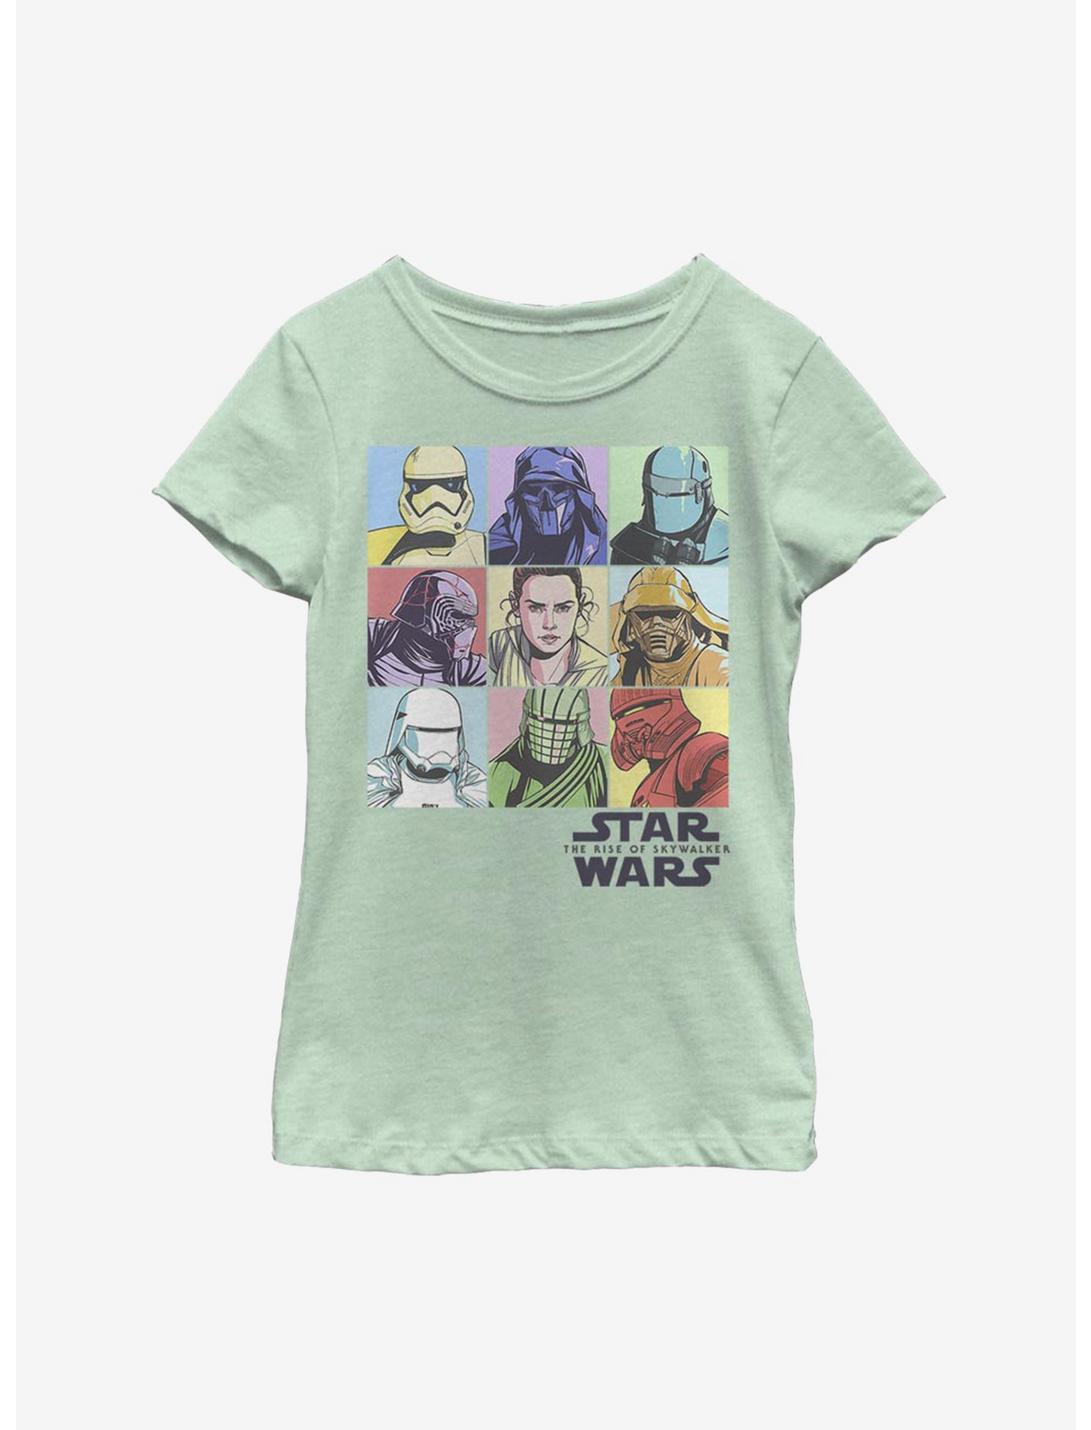 Star Wars Episode IX The Rise Of Skywalker Pastel Rey Boxes Youth Girls T-Shirt, MINT, hi-res